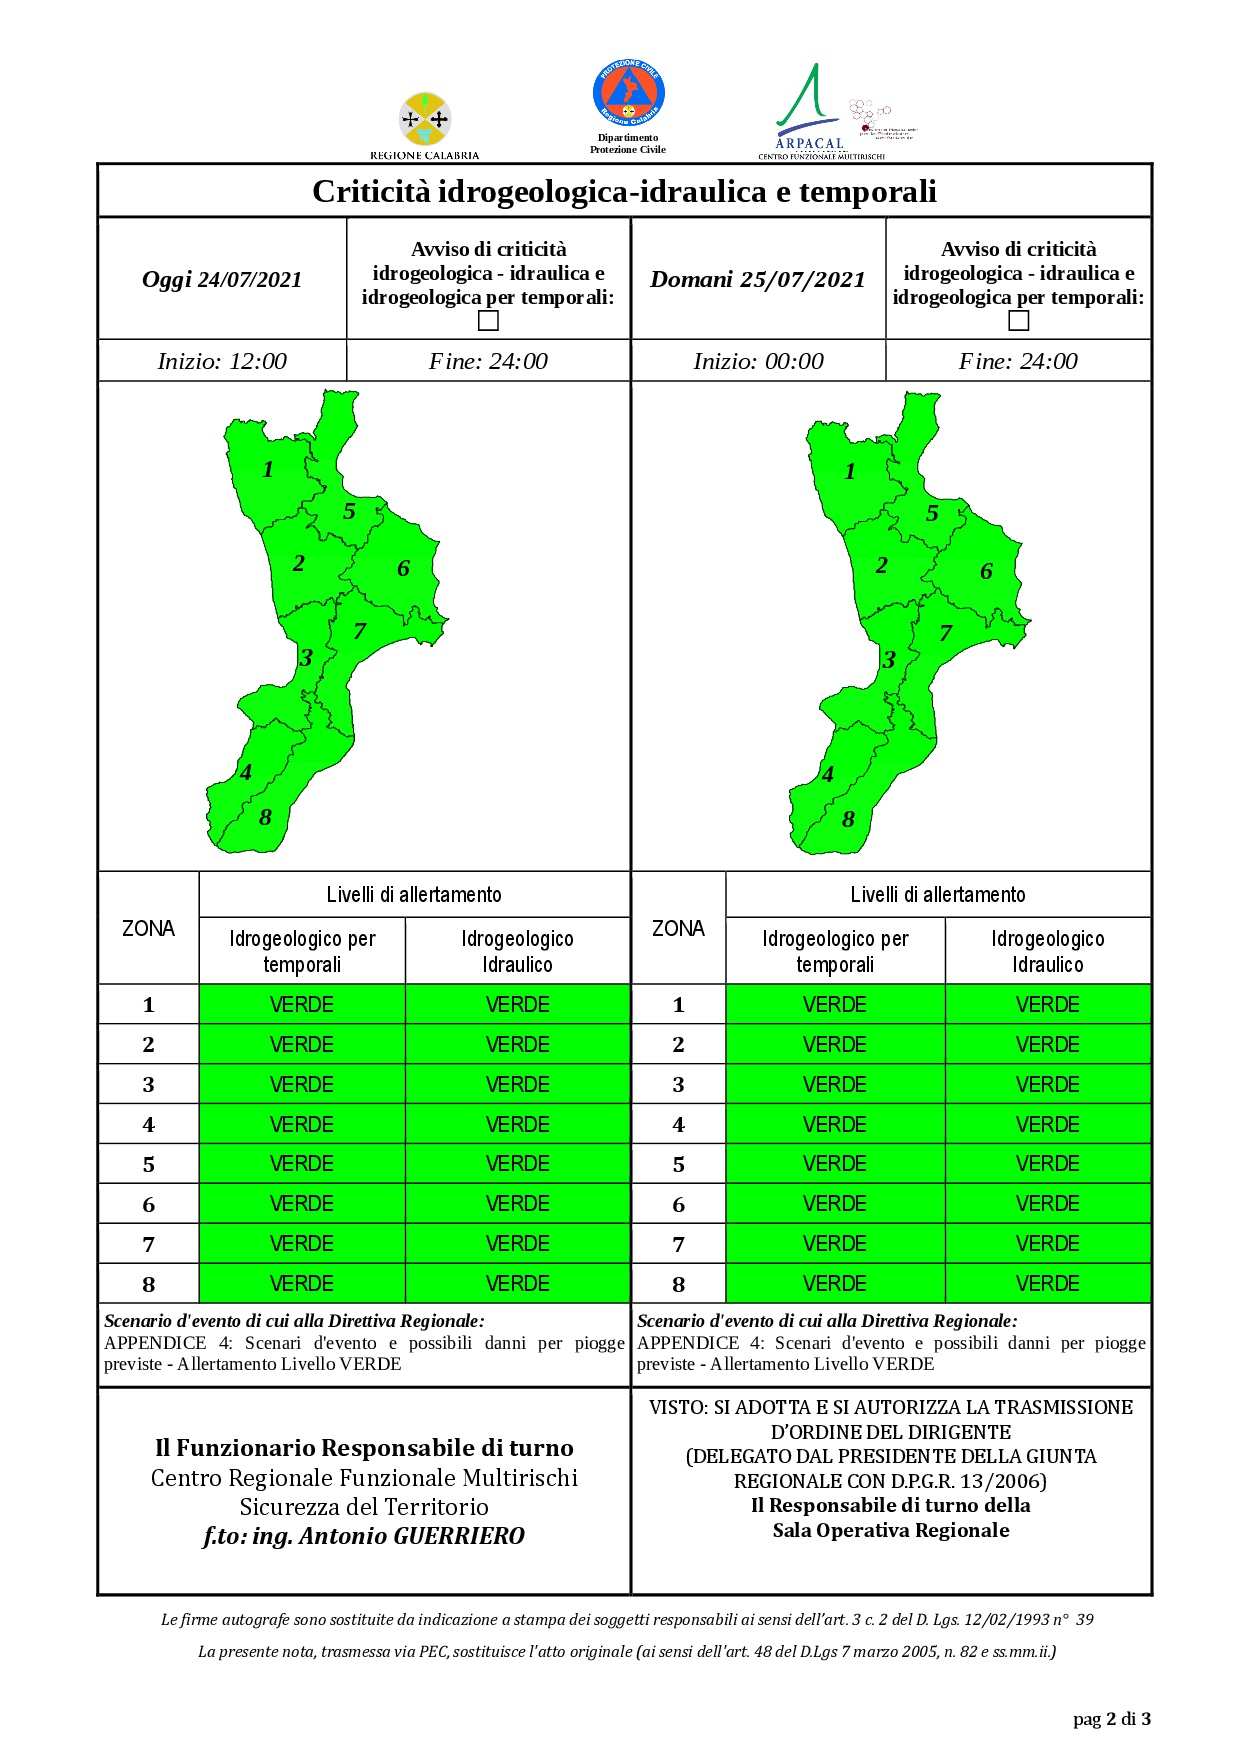 Criticità idrogeologica-idraulica e temporali in Calabria 24-07-2021